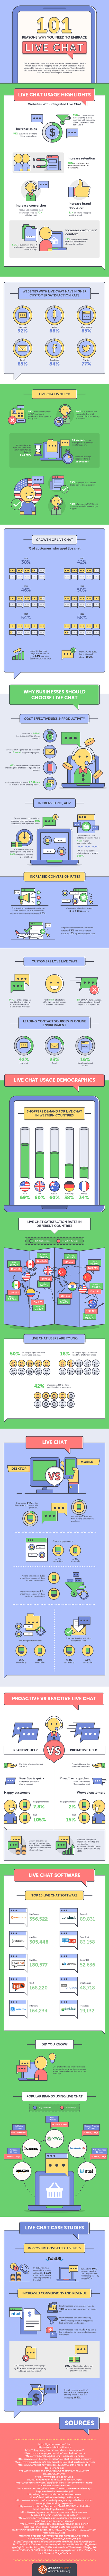 Live Chat Statistics Infographic